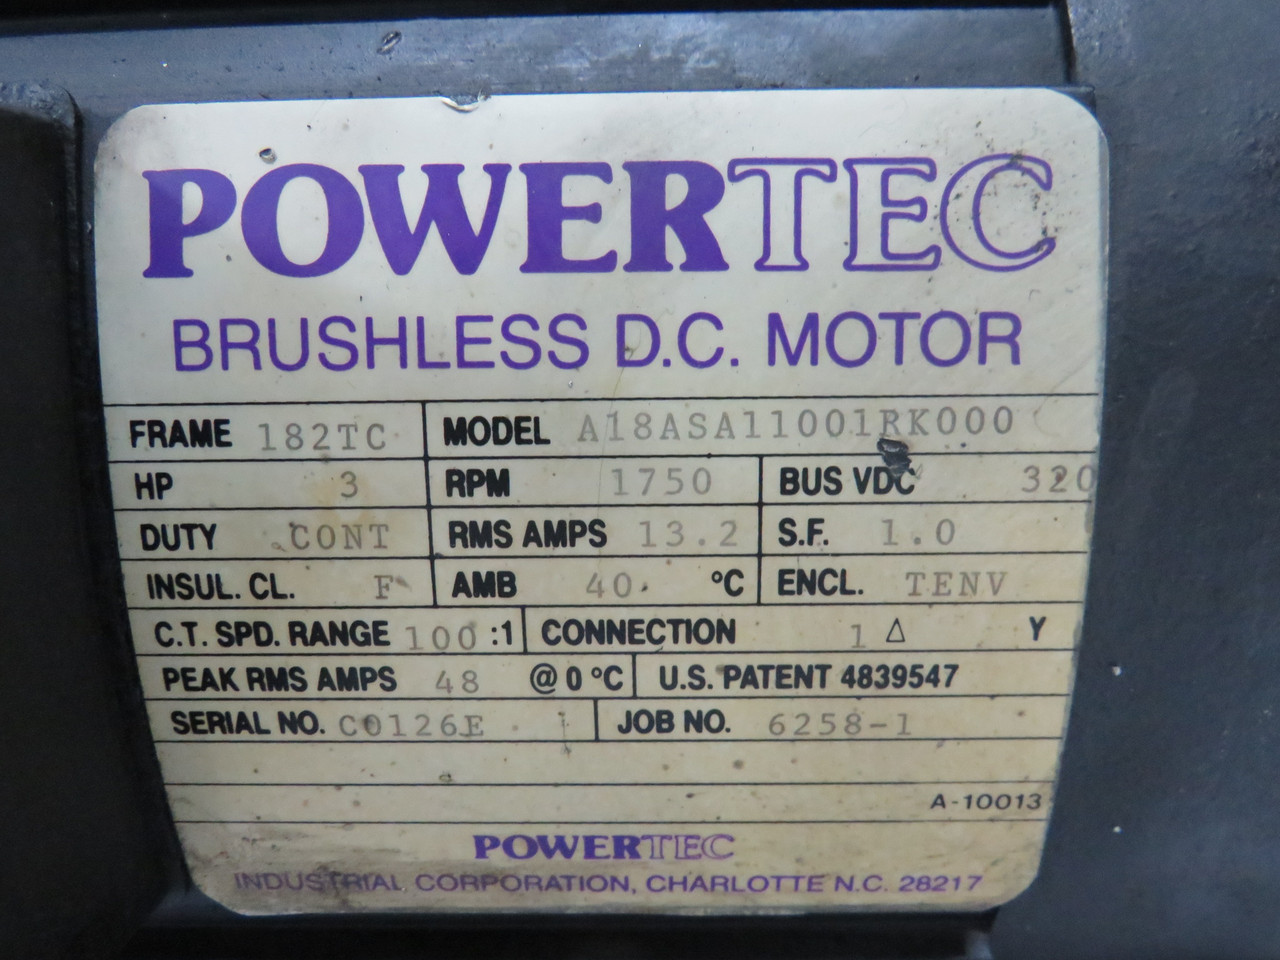 PowerTec Brushless DC Motor 3HP 1750RPM 320VDC 182TC TENV 13.2A USED